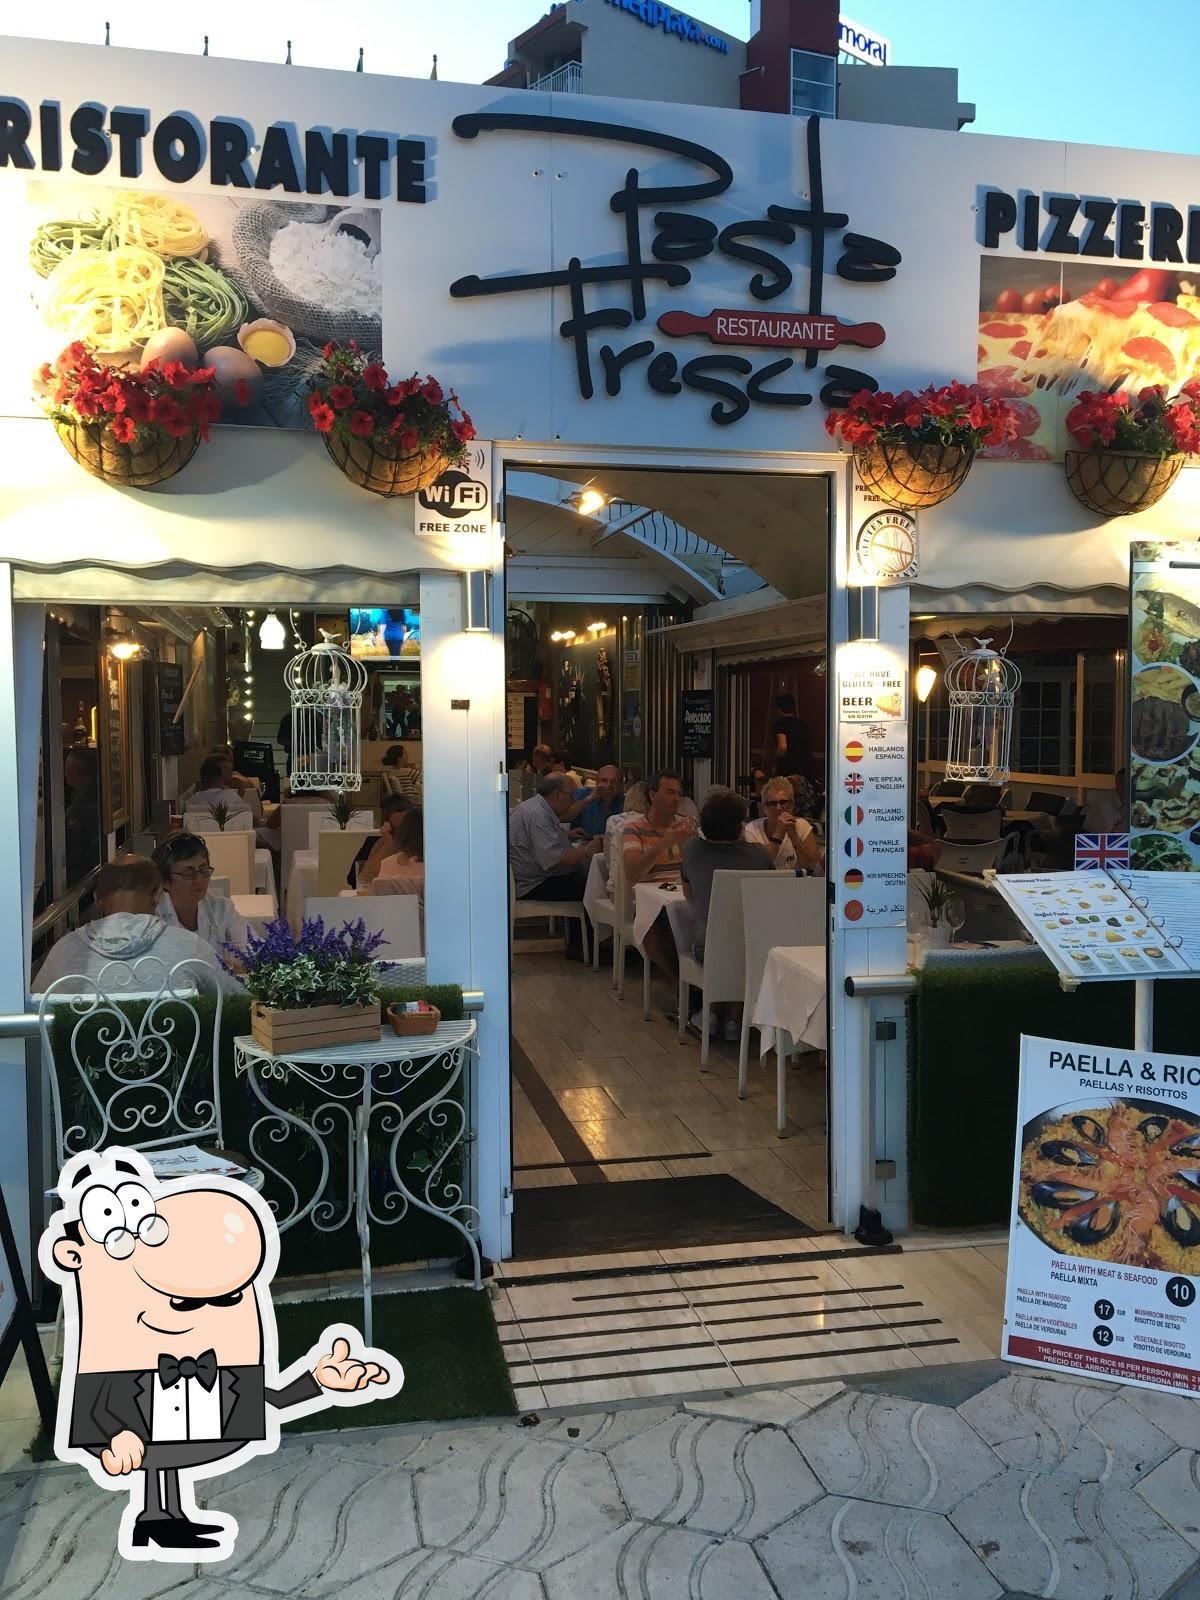 Pasta Fresca Italian Restaurant, Av. Antonio Machado, Edificio Tropicana,  Local 3 in Benalmádena - Restaurant reviews